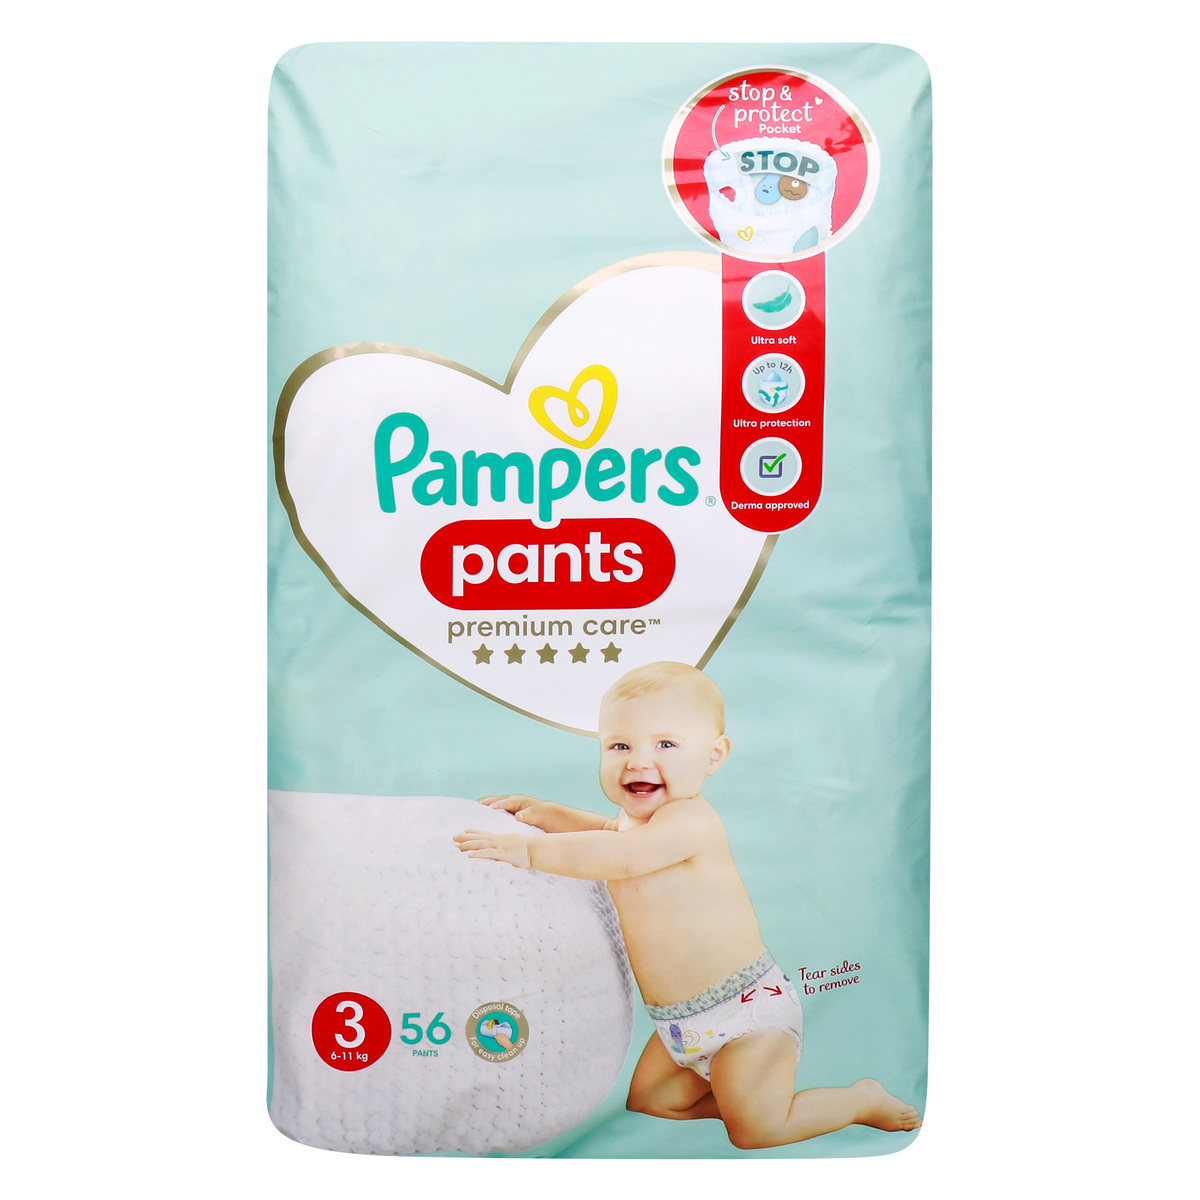 Buy Pampers Pants Diapers Medium Size 3 31 Count Online in Pakistan